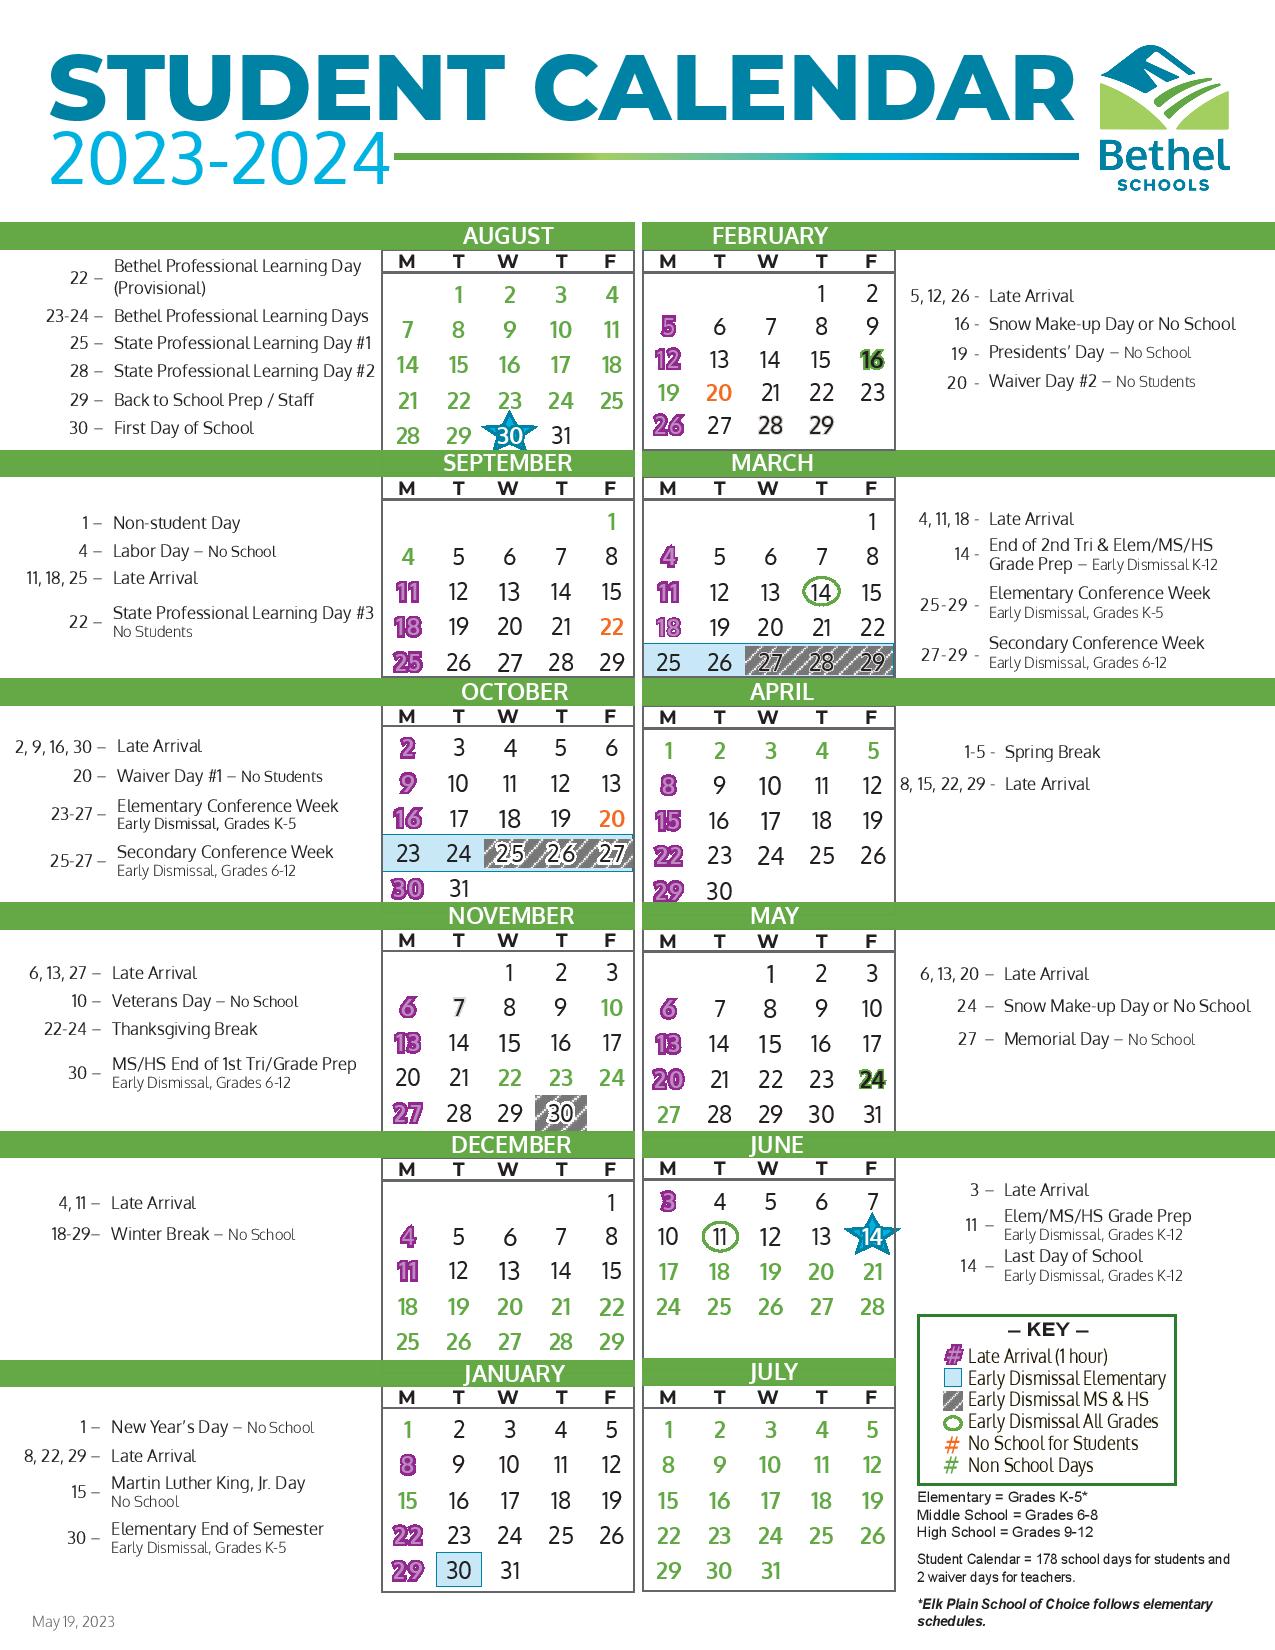 bethel-school-district-calendar-2023-2024-holiday-breaks